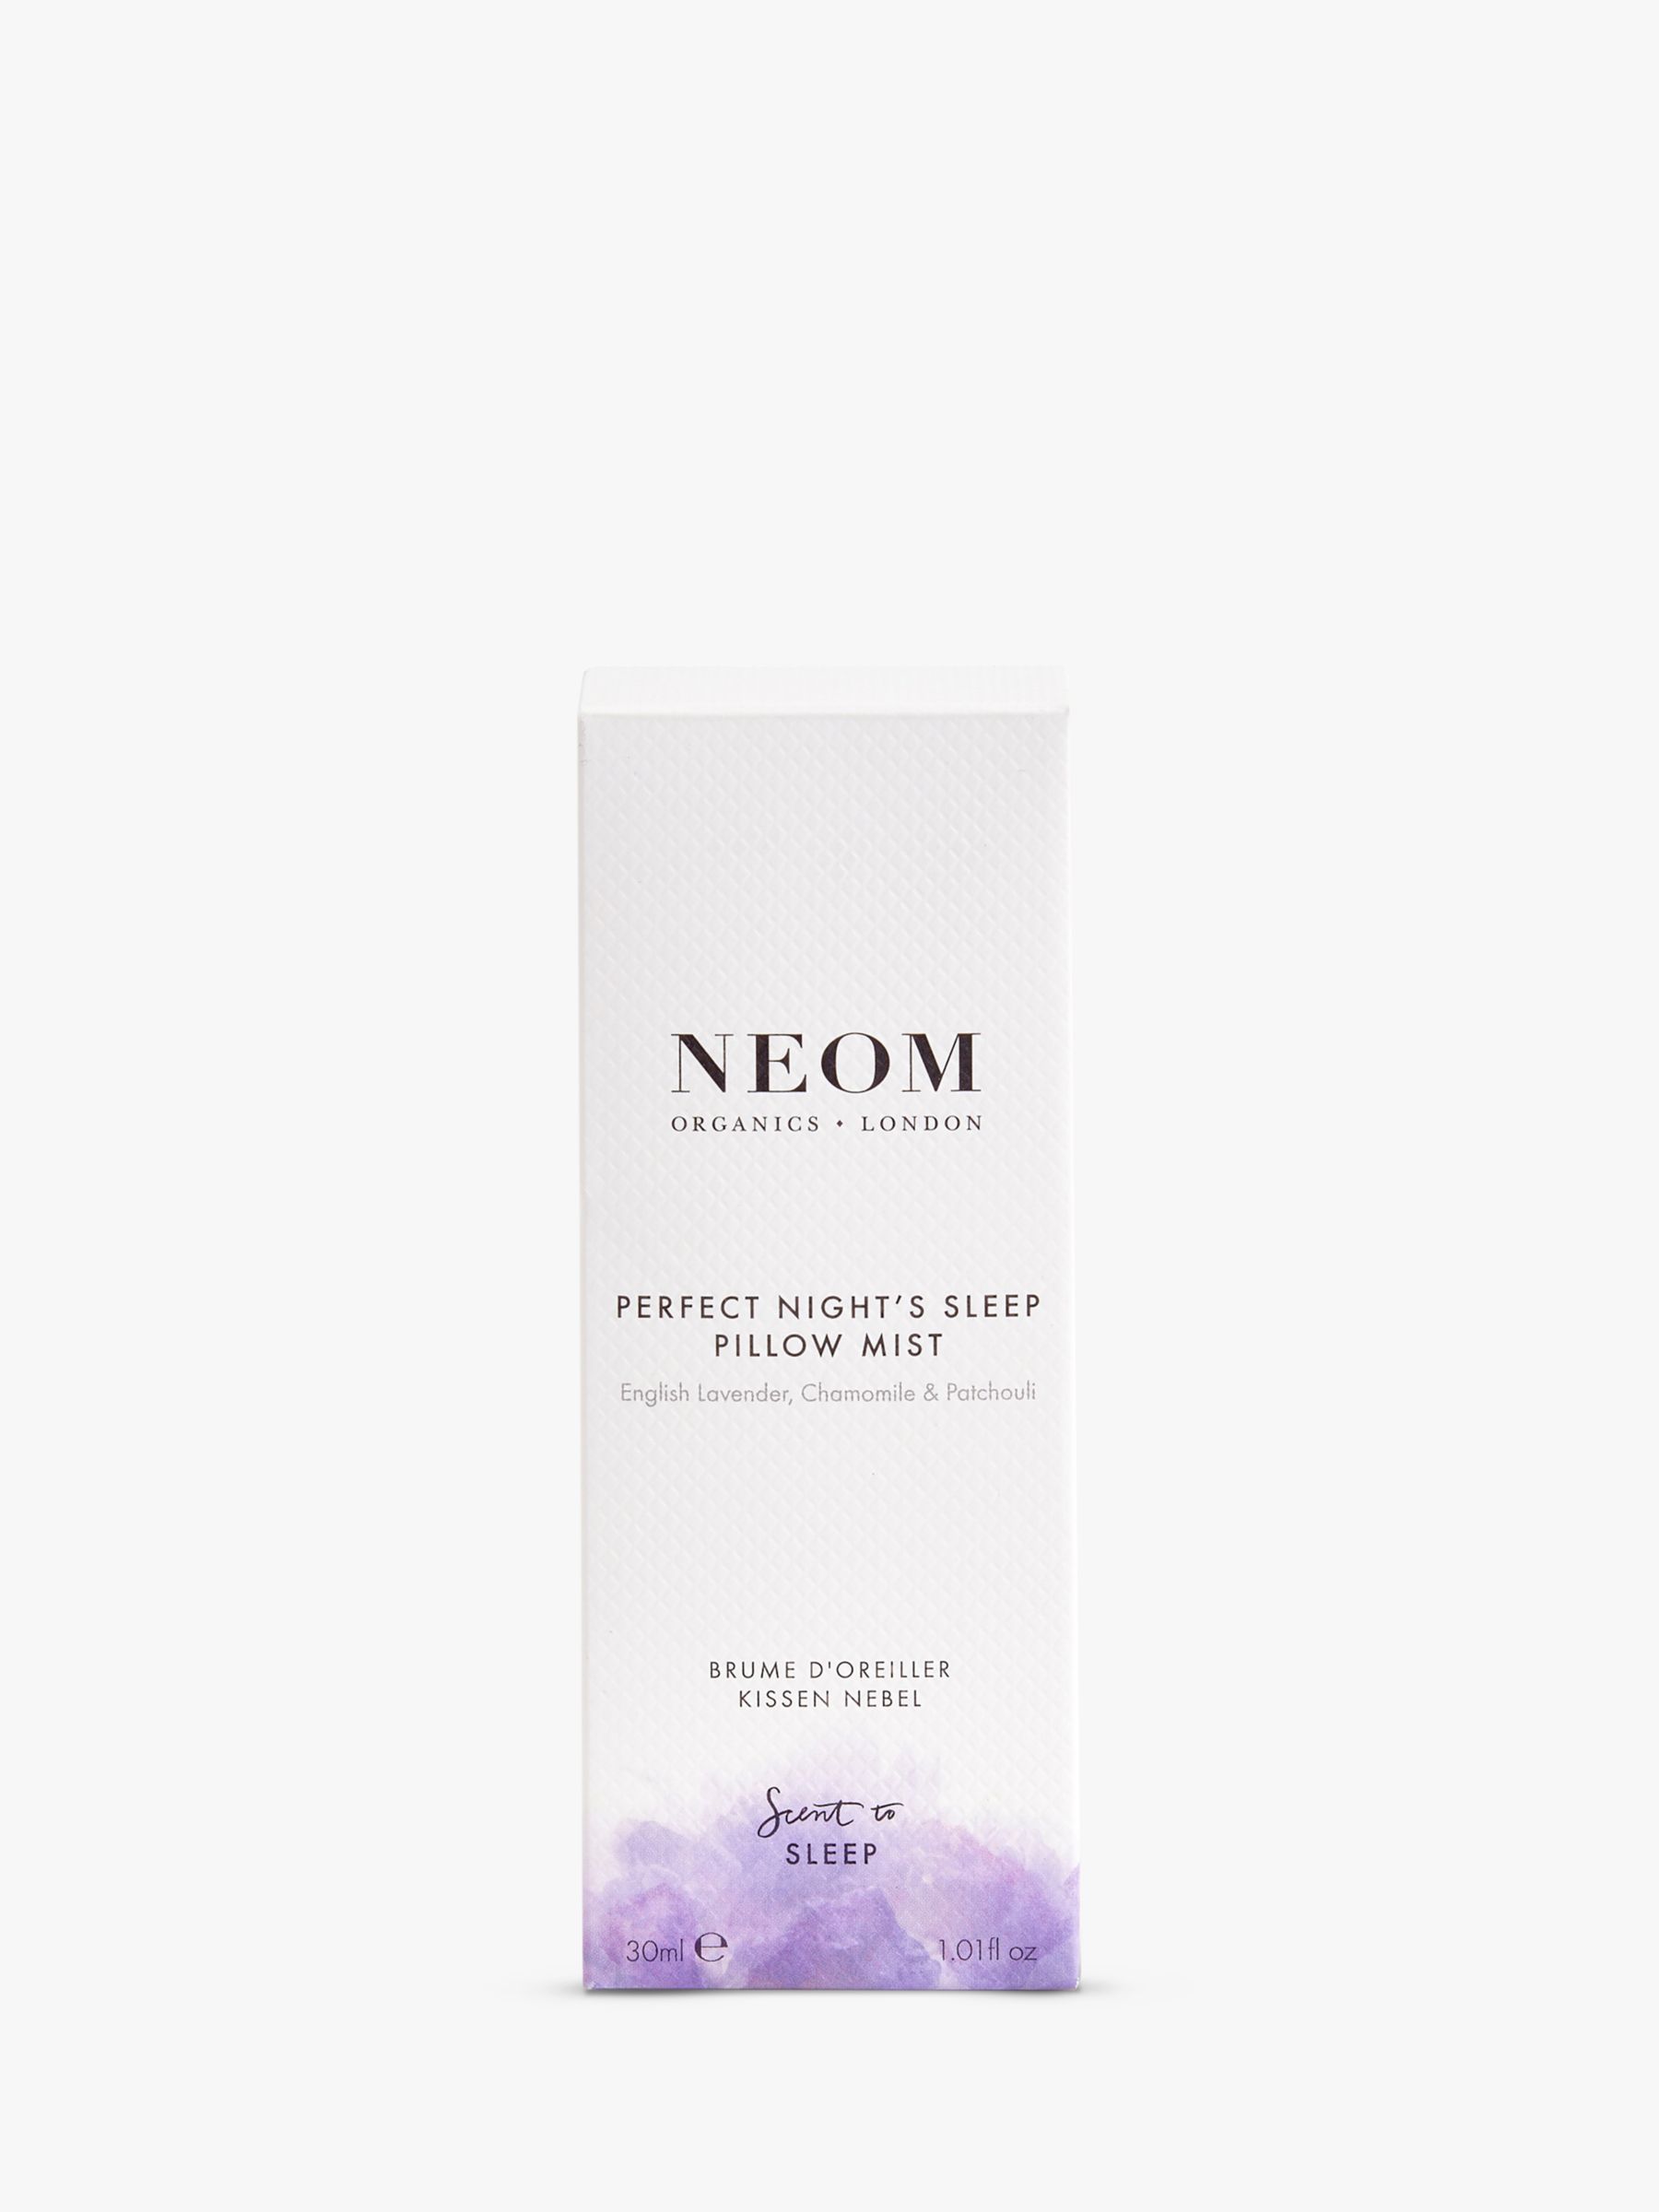 Neom Organics London Perfect Night's Sleep Pillow Mist, 30ml 3